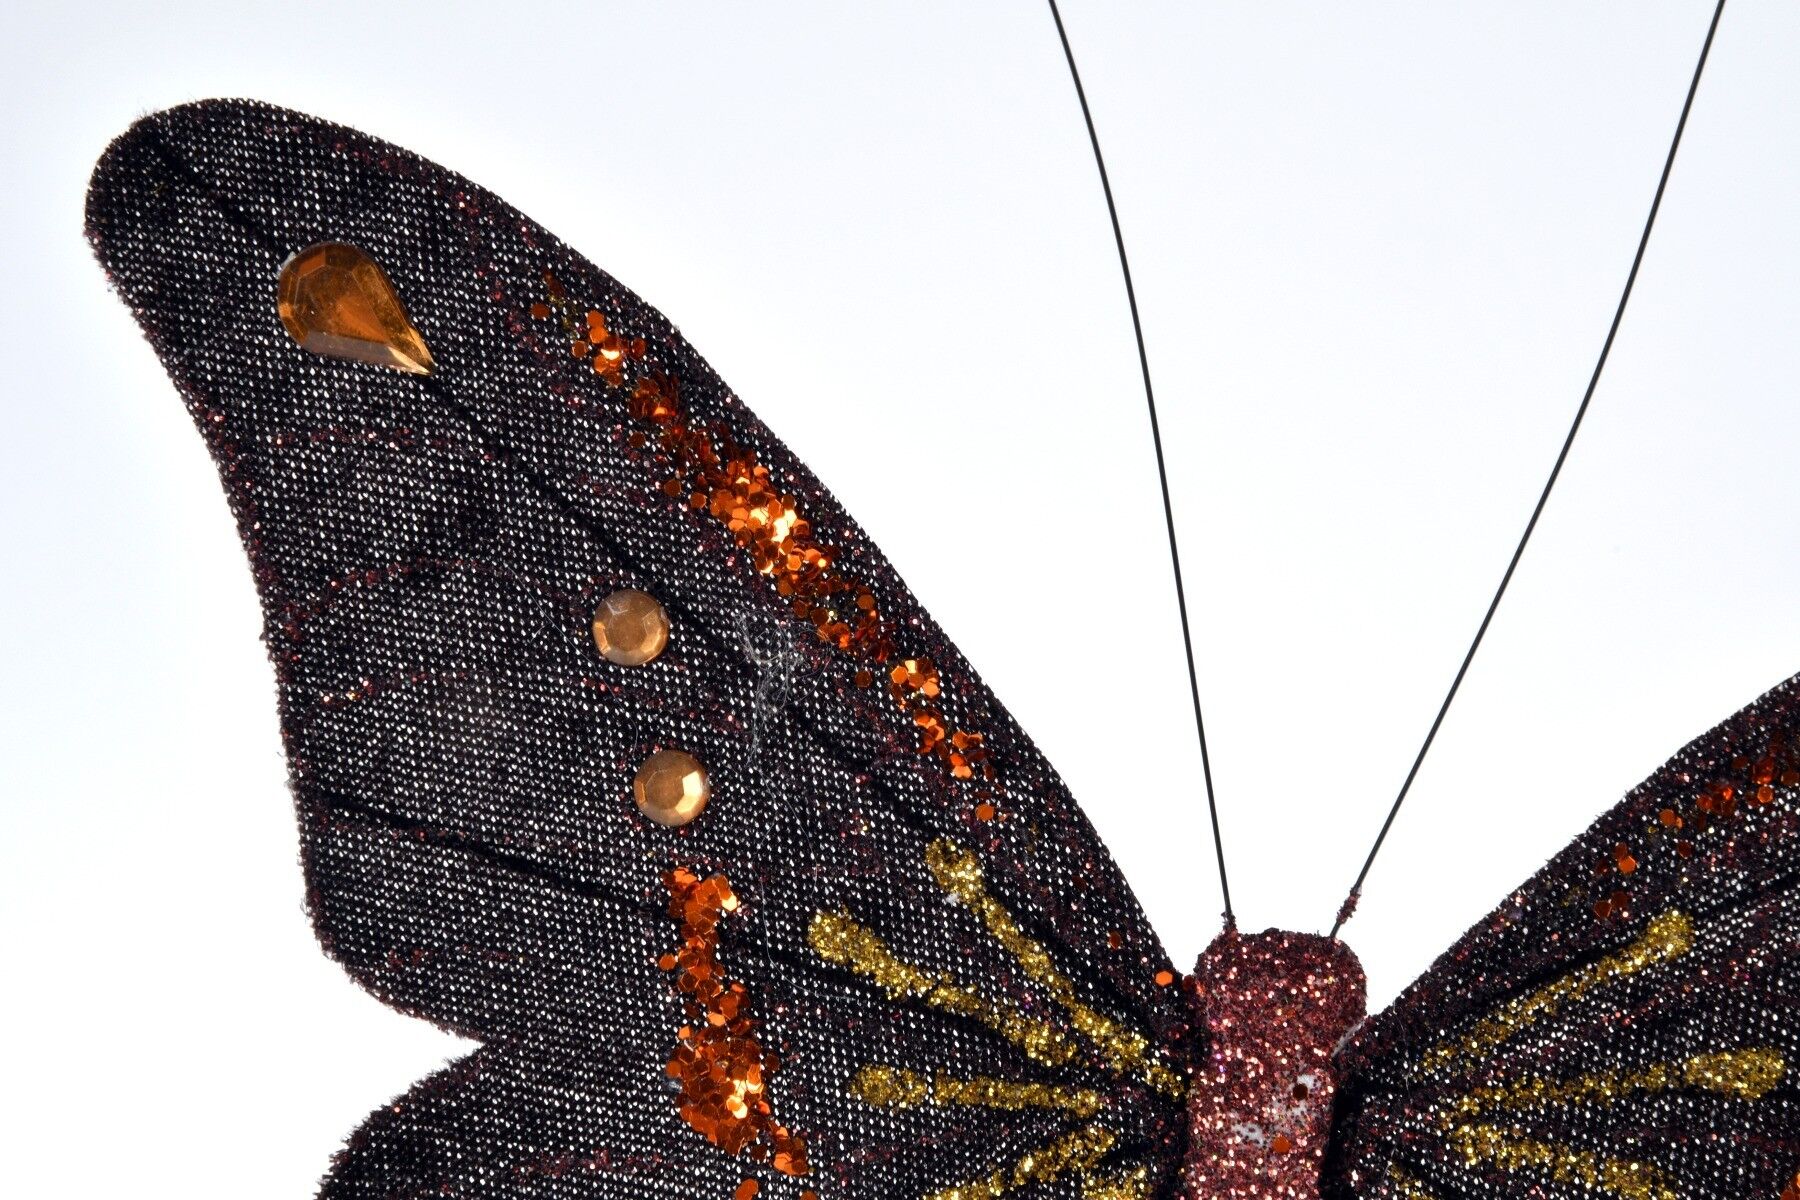 Motyl Klips 17 cm